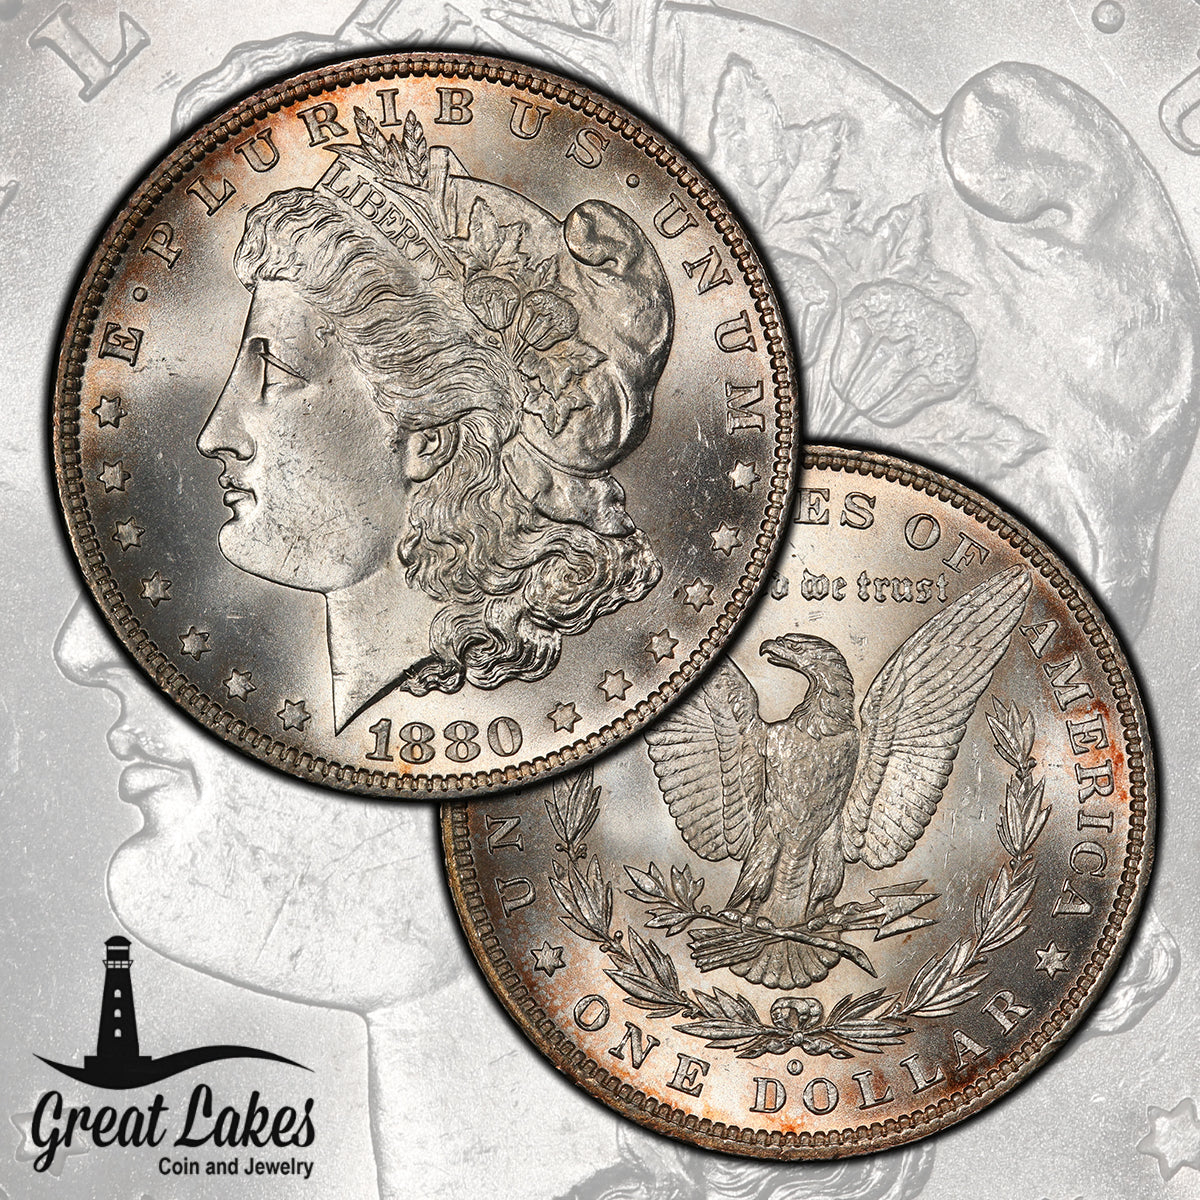 1880-O Morgan Silver Dollar PCGS MS64 CAC